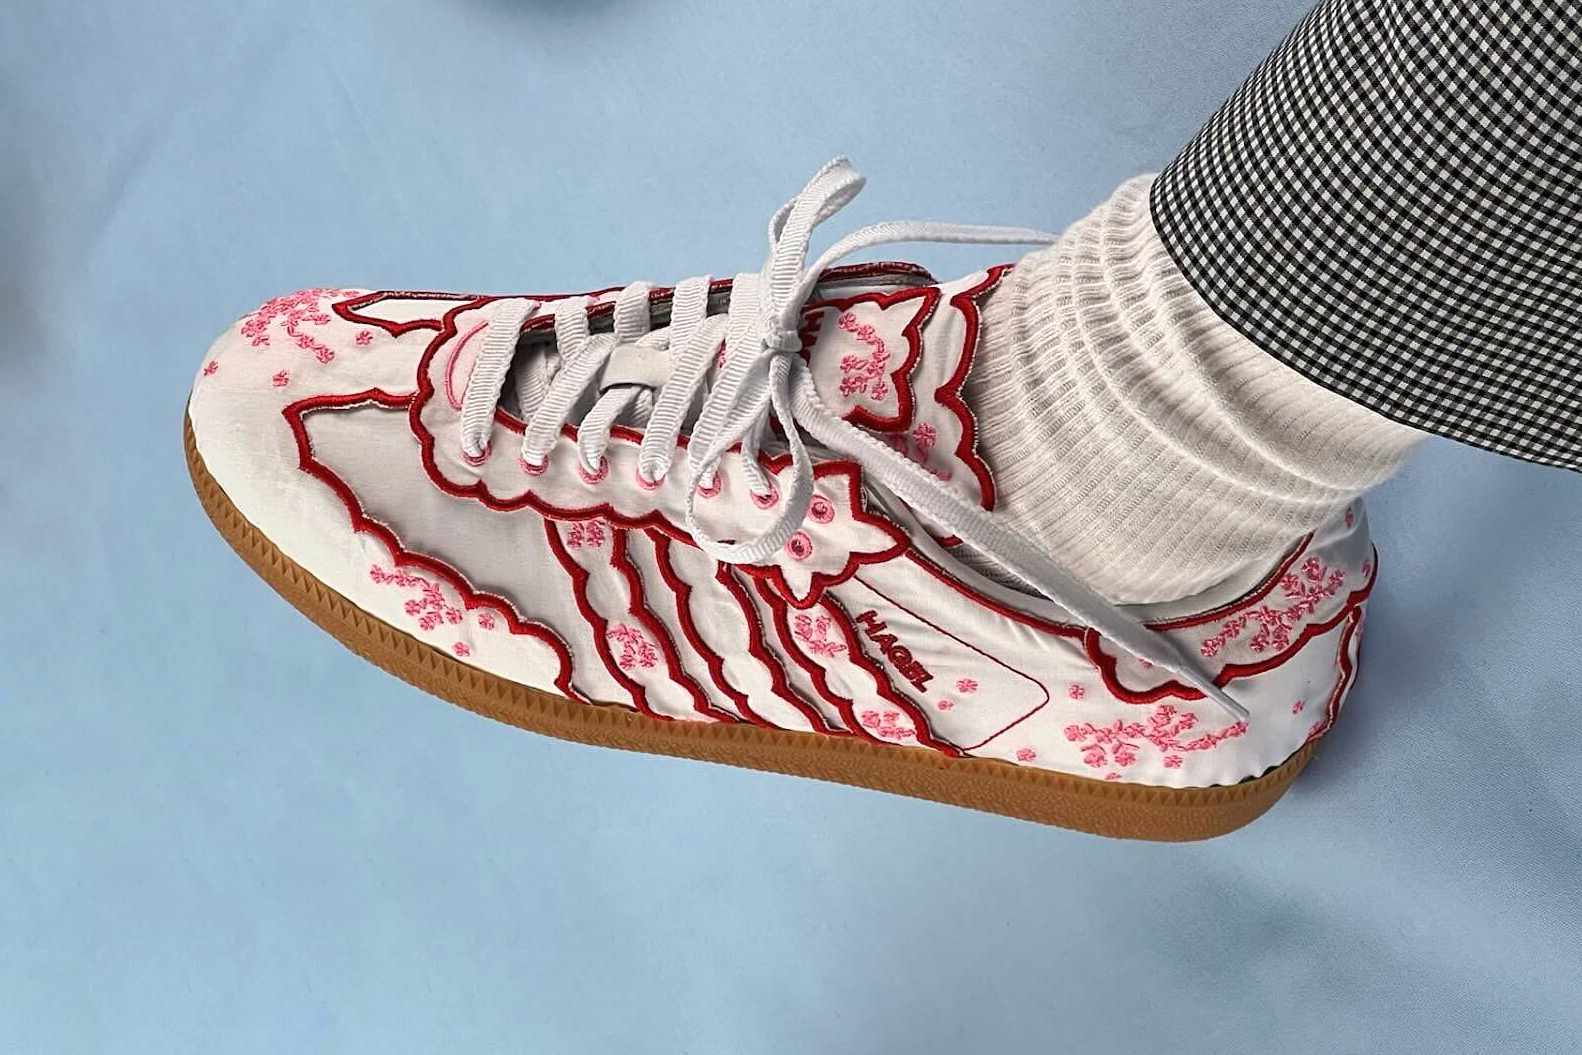 Studio Hagel's embroidered "Napkin" adidas Samba sneaker in cream and red